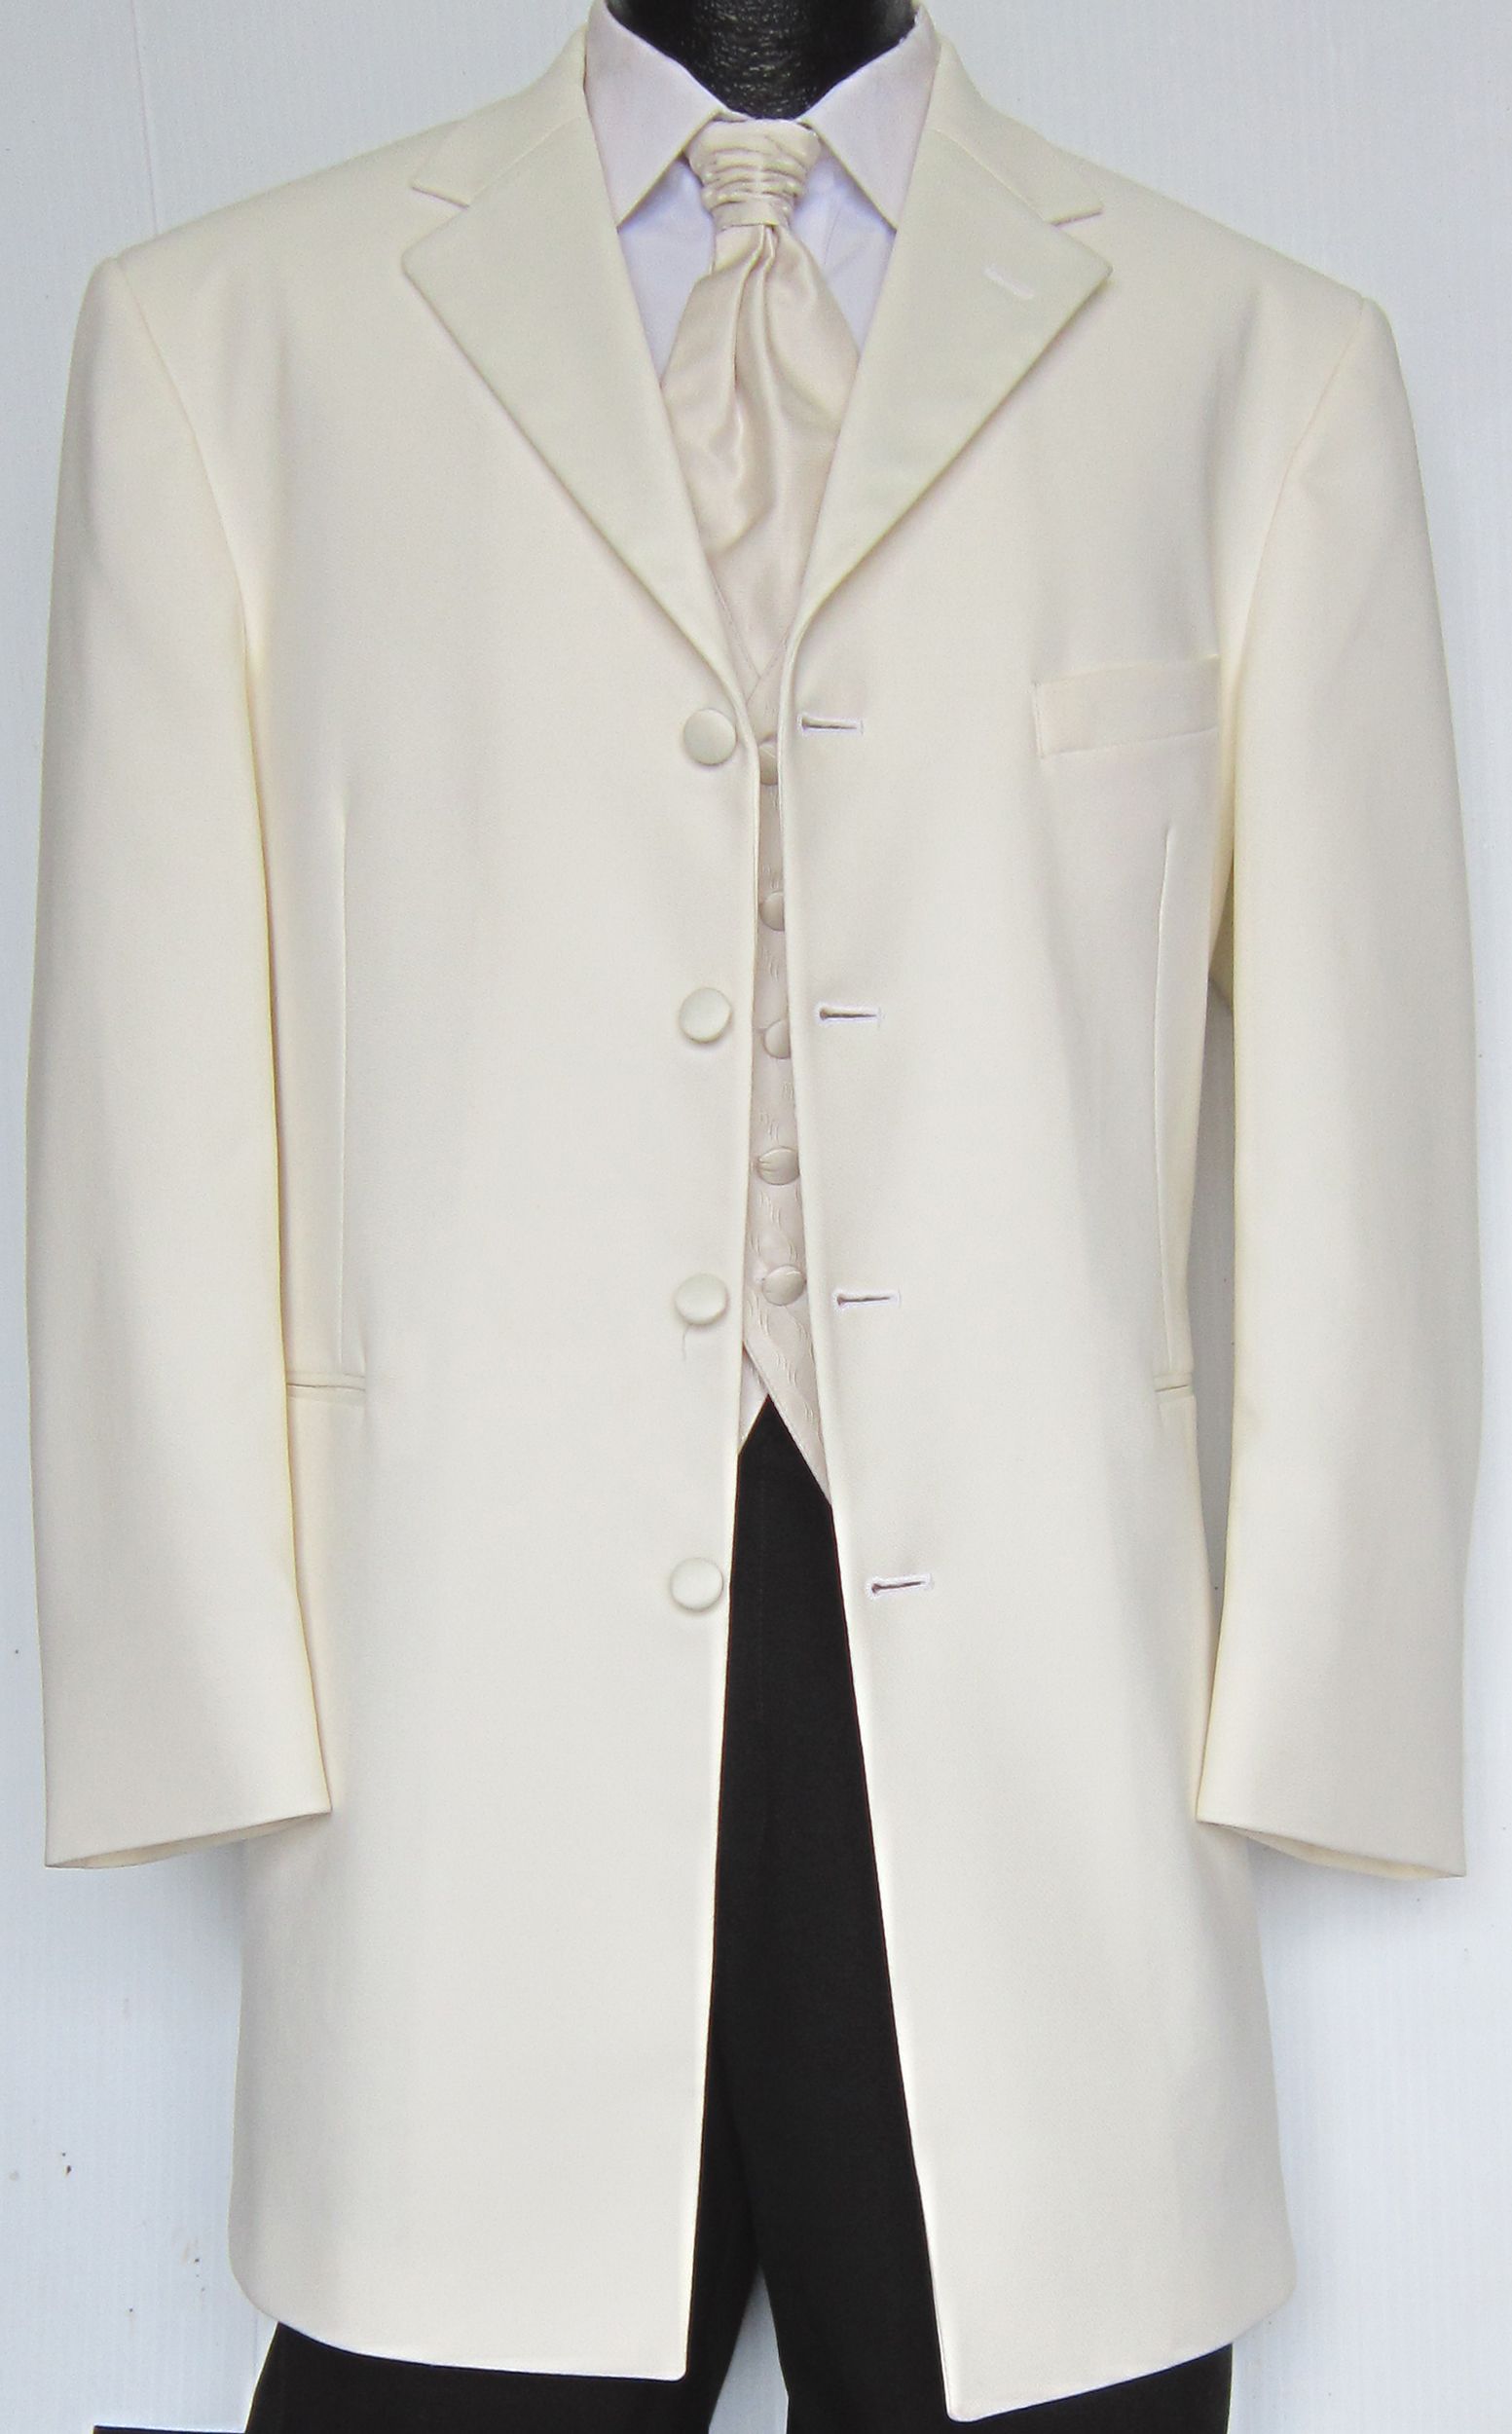 Ivory / Off White Four Button Tuxedo Dinner Jacket Costume Theater